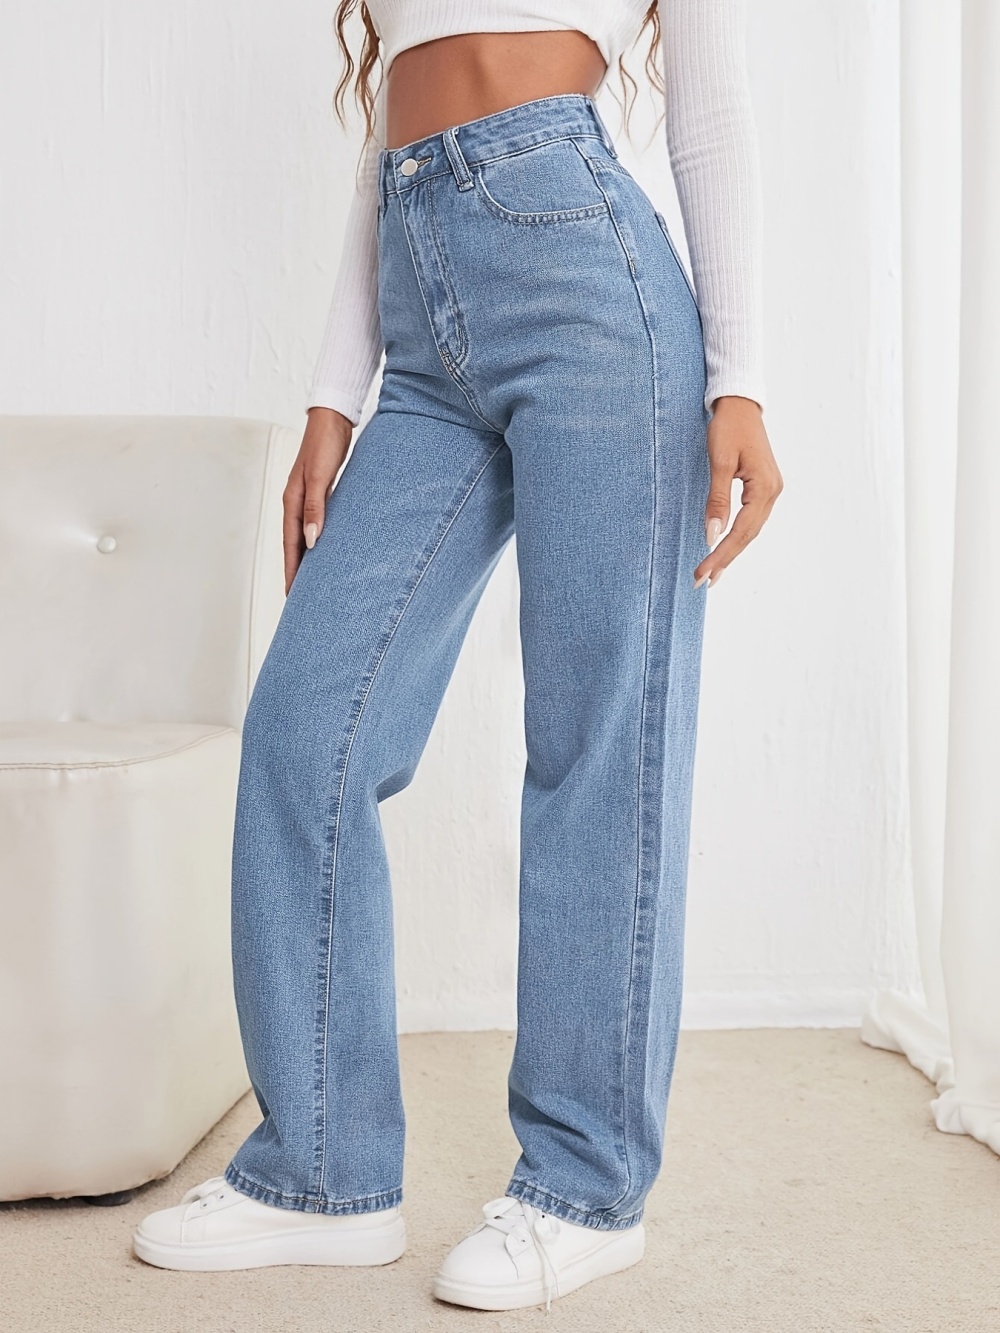 Casual denim European style jeans for women